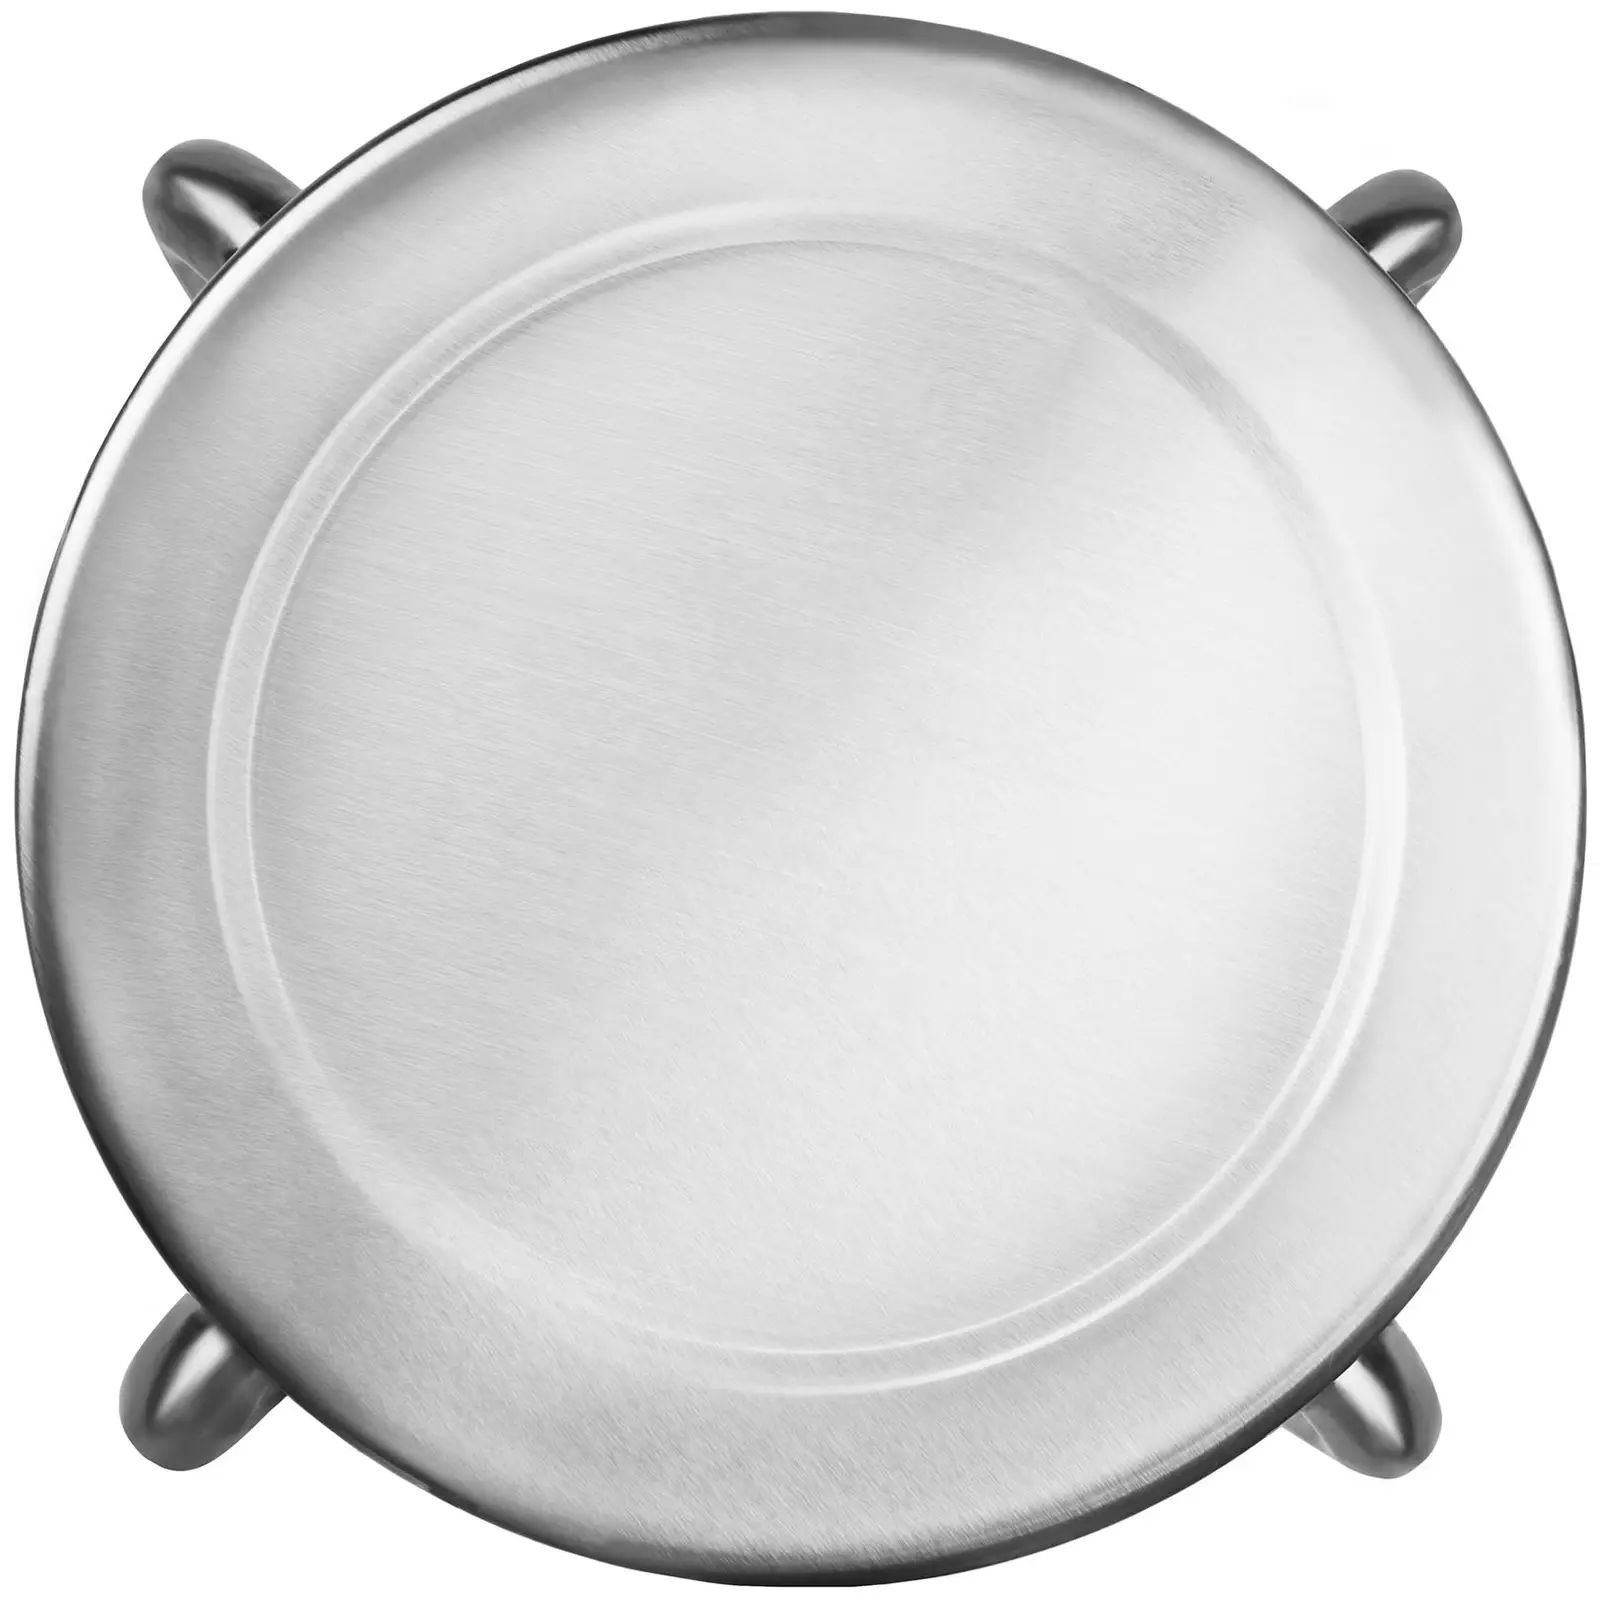 Banqueta baja de acero inoxidable - diametro 29 cm